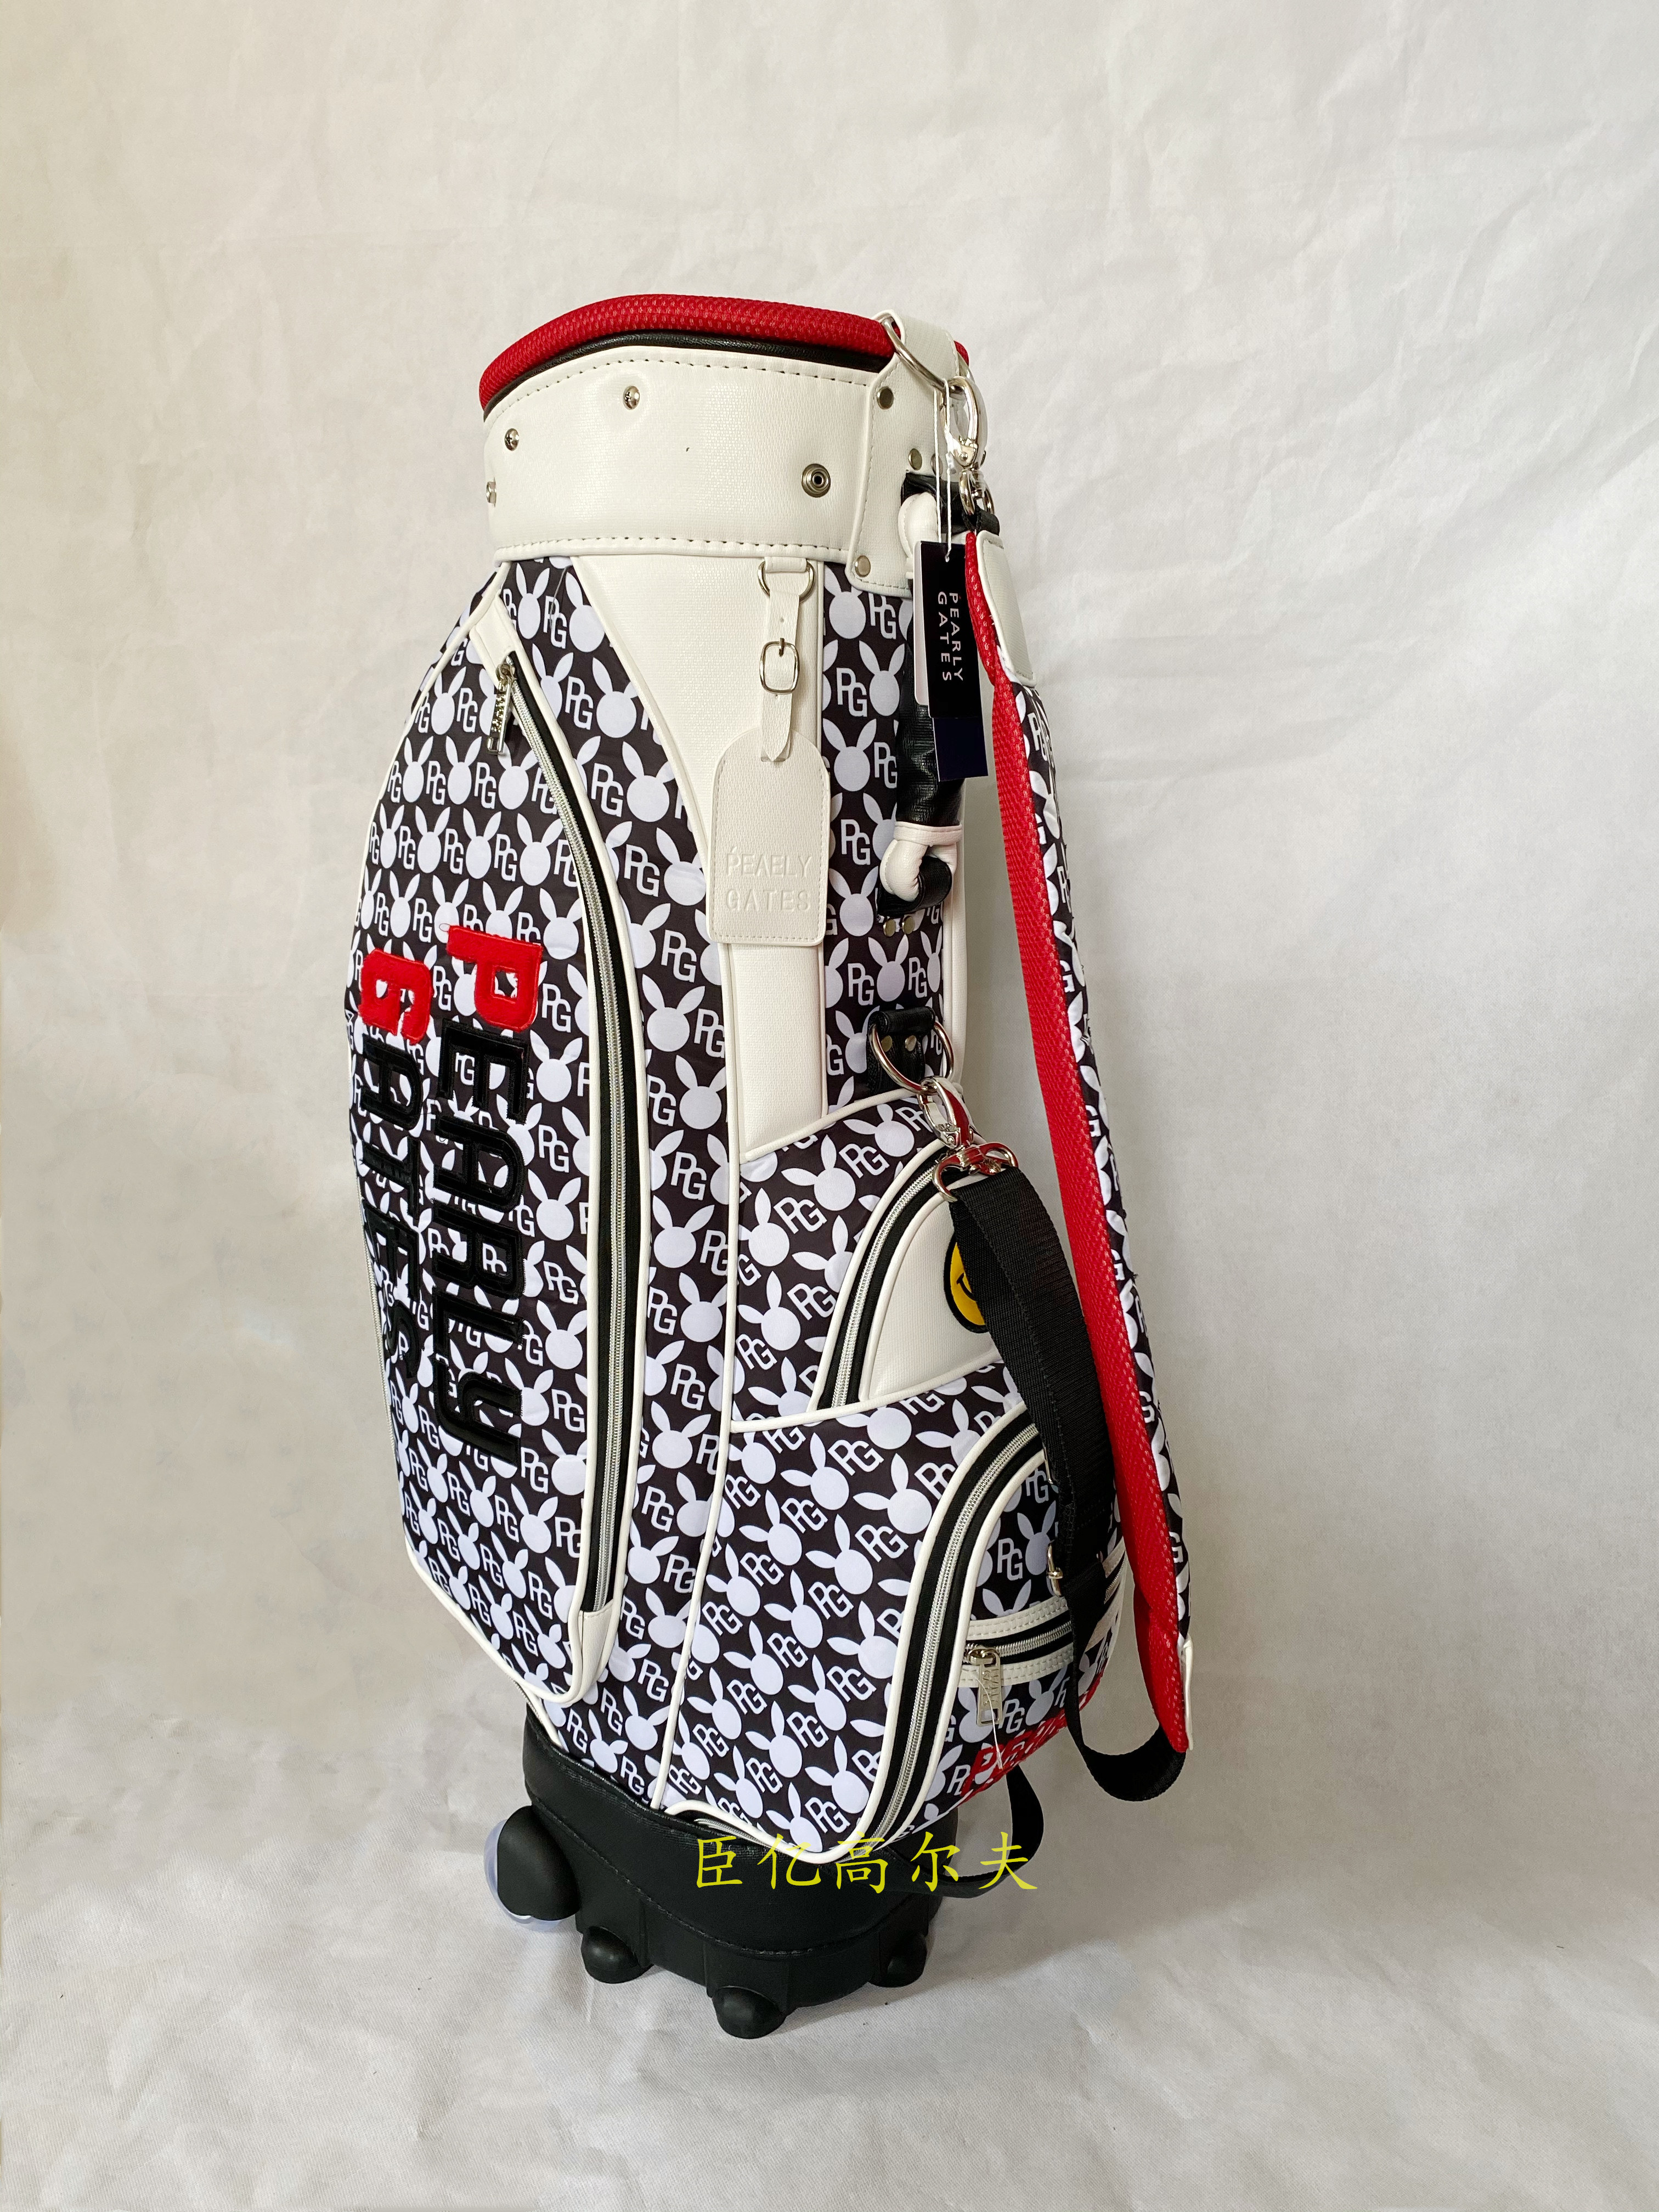 DEZENS New Golf Bag Women Full Clubs Set Standard Golf Bags Pink/Black printing